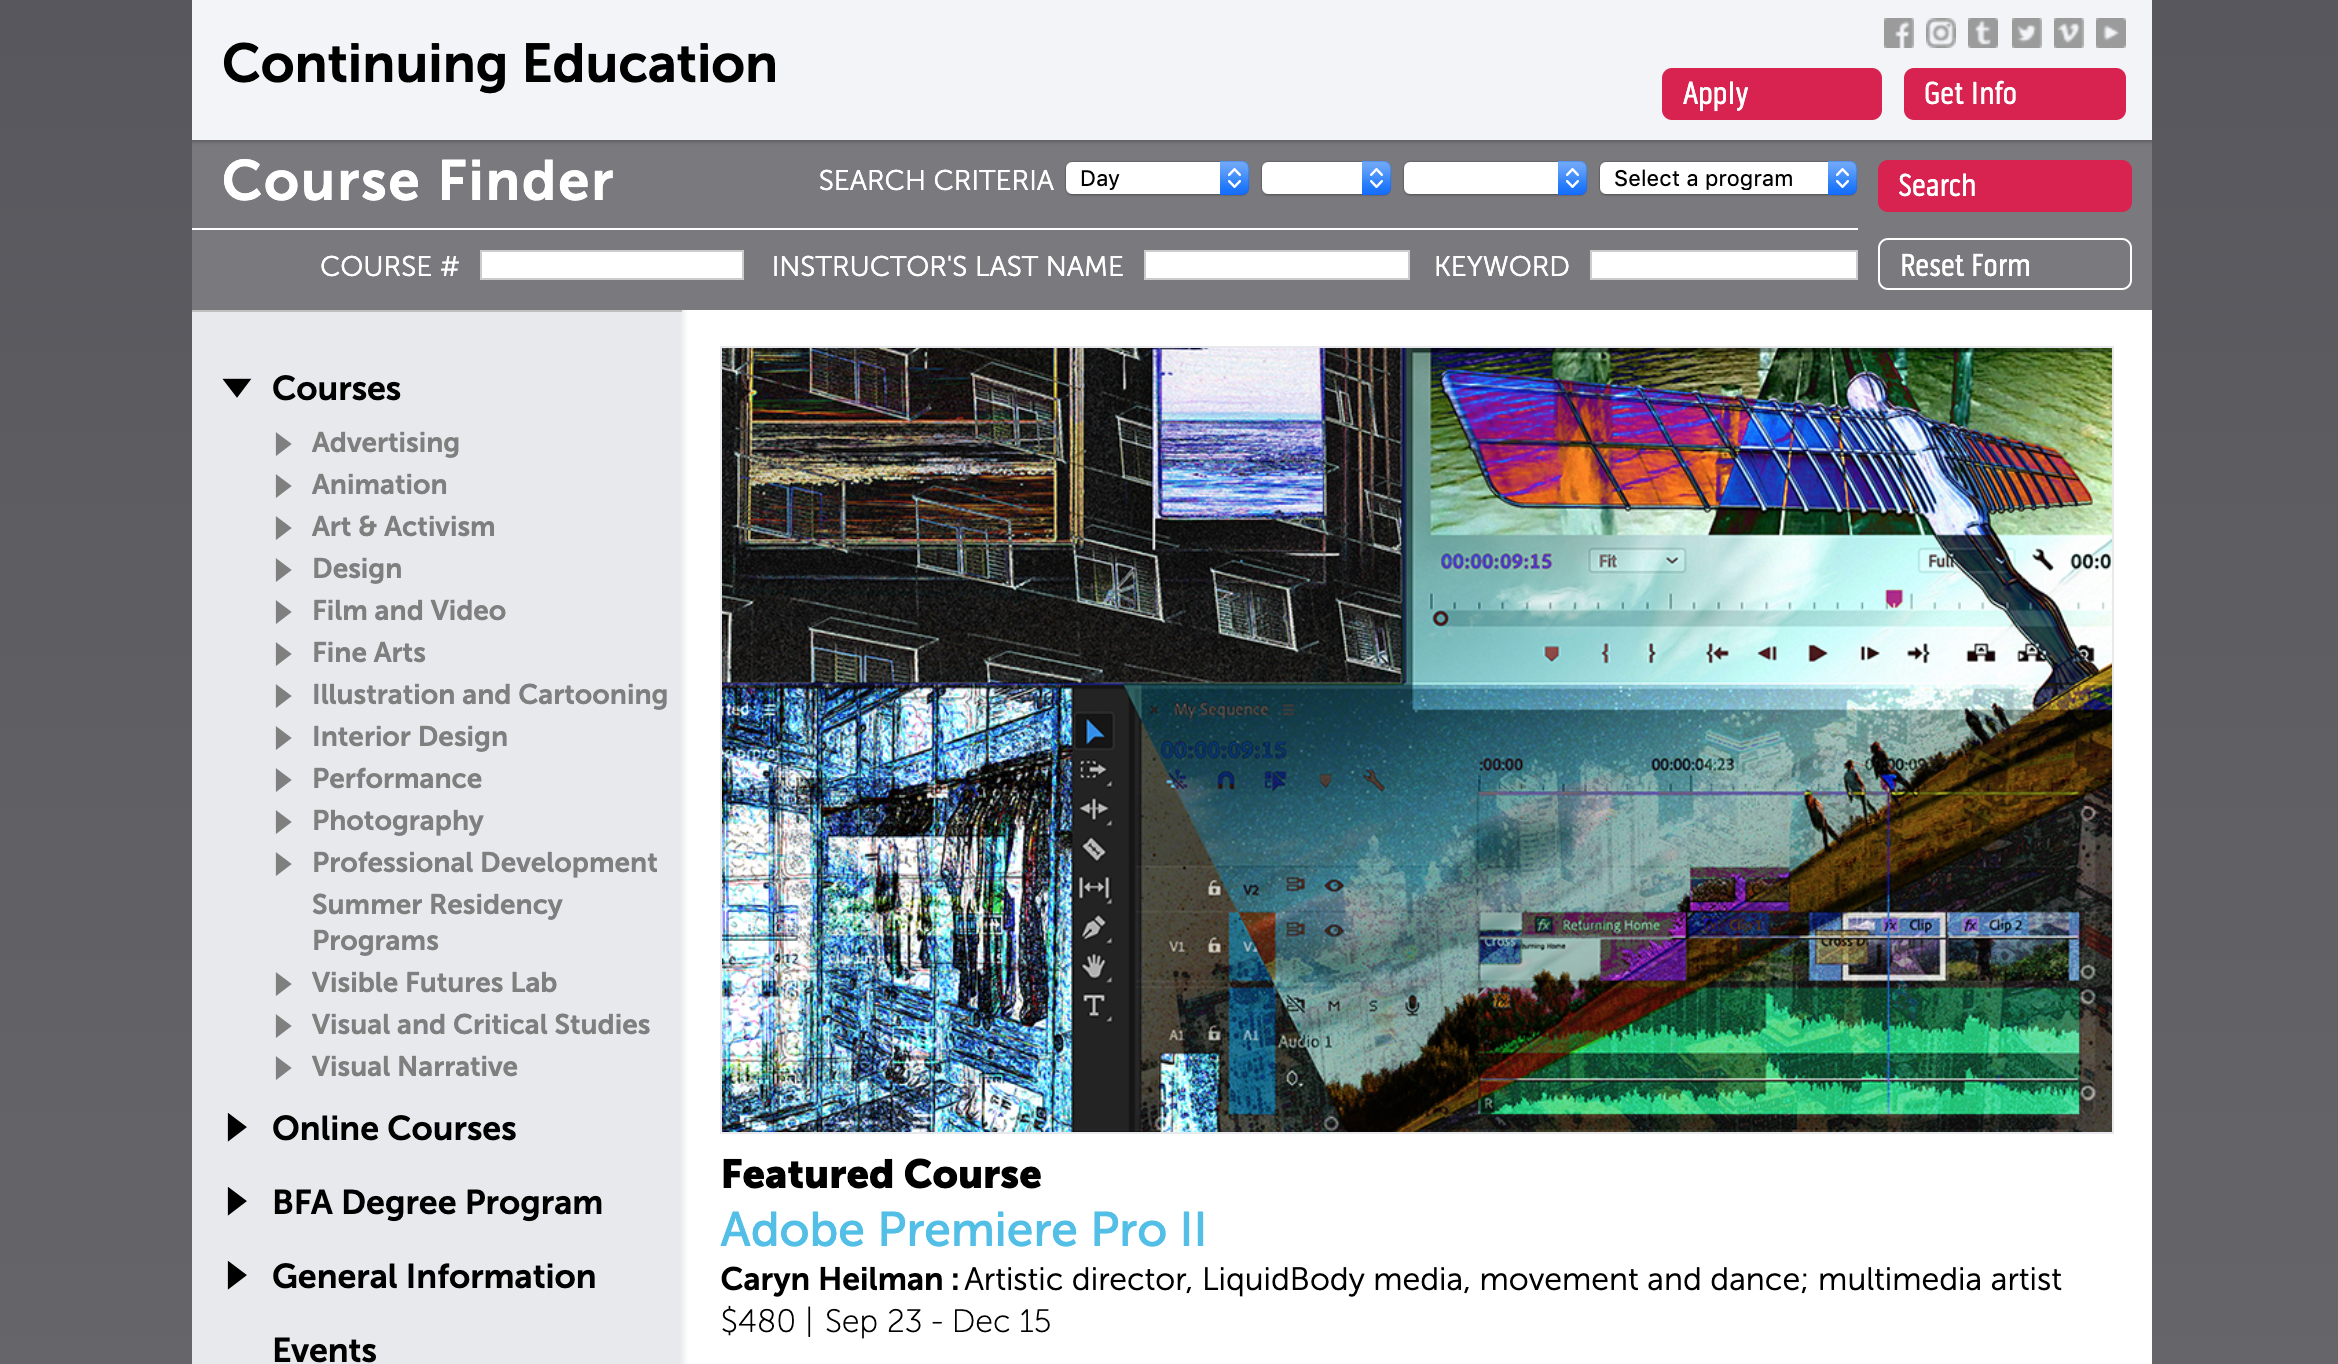 Adobe Premiere Pro II Online Featured Course